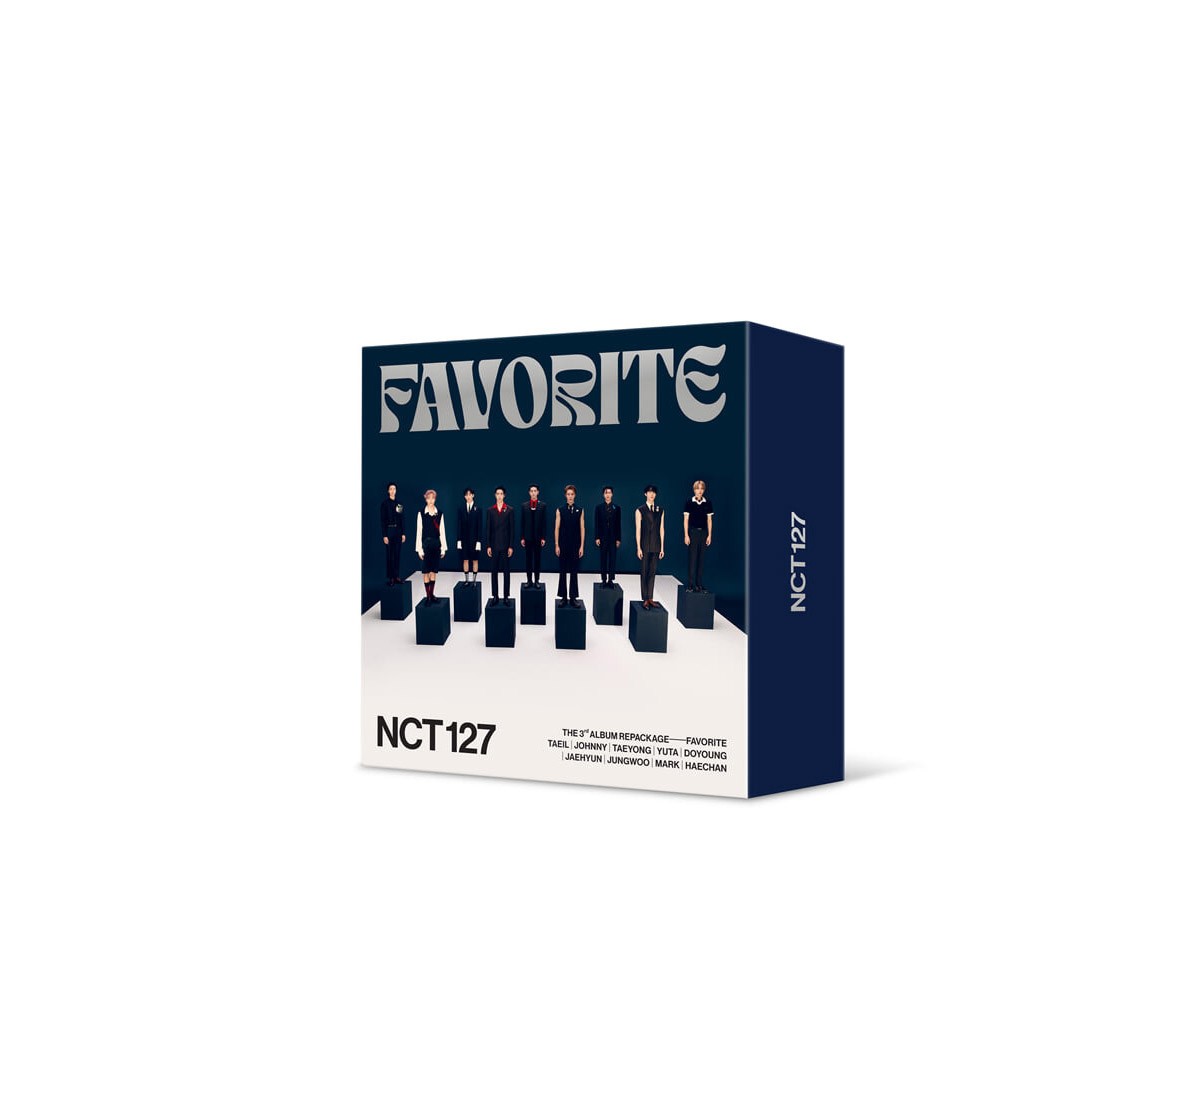 [KiT] NCT 127 3rd Album Repackage - Favorite (KiT Ver / Poetic Ver.)  Air-KiT + Poster